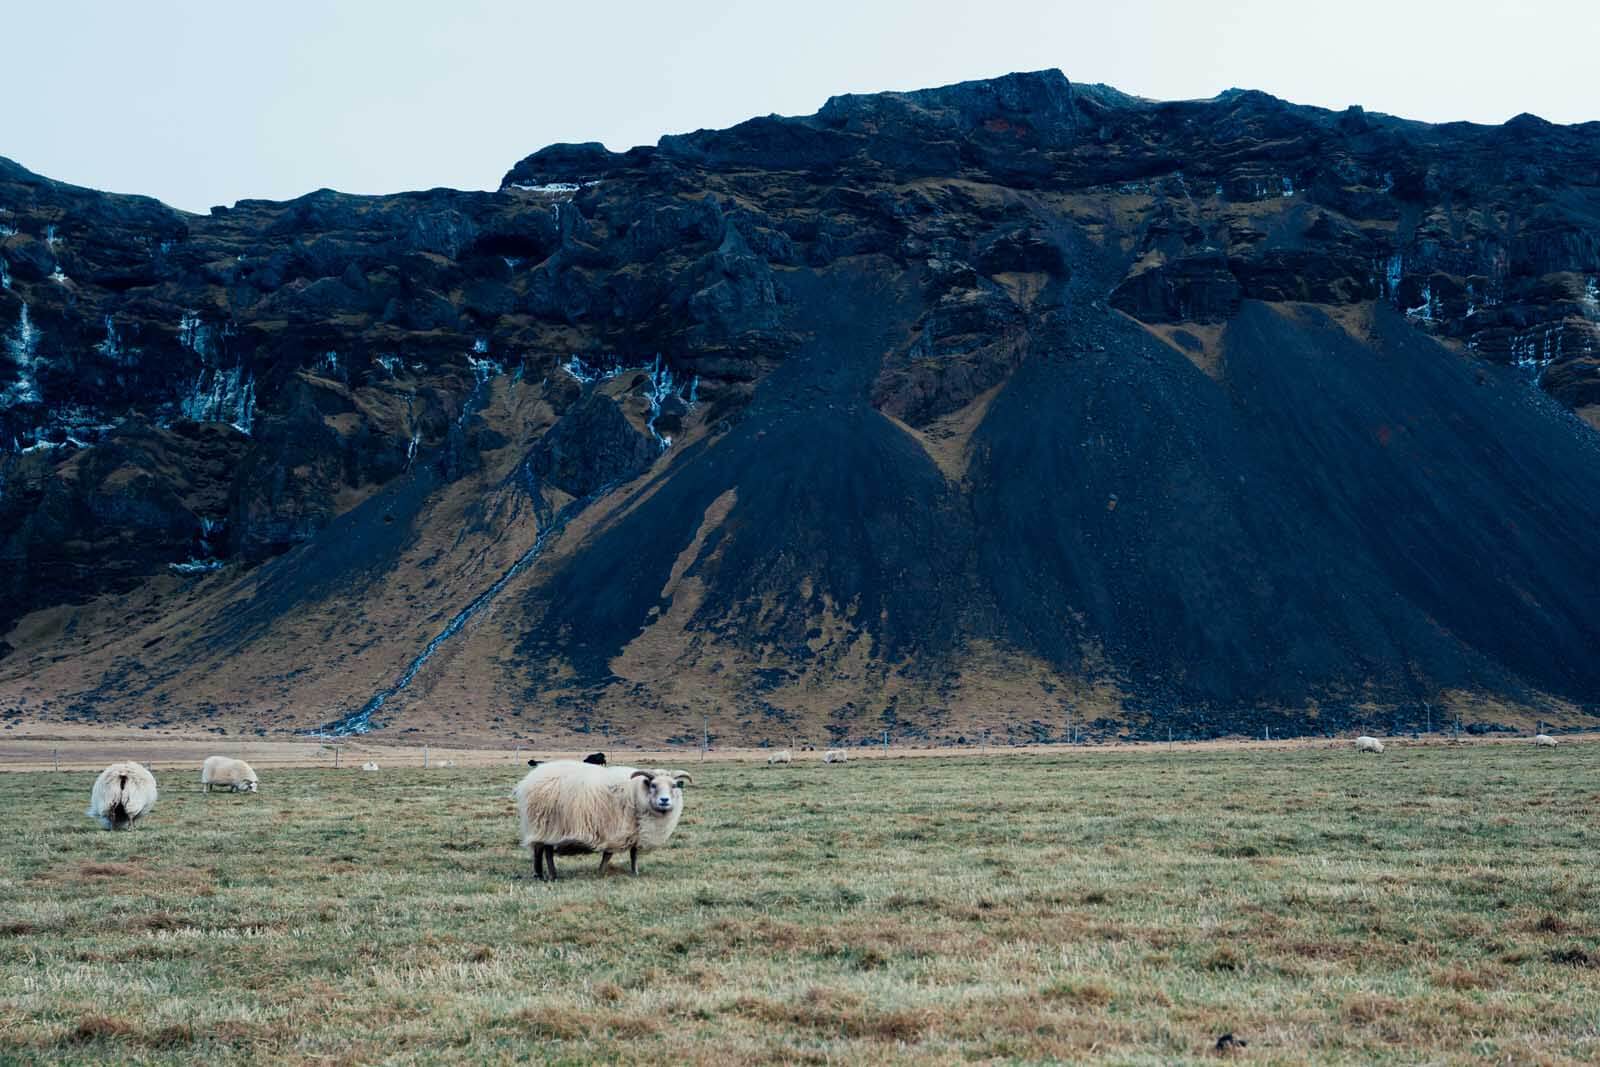 A sheep scene in Iceland